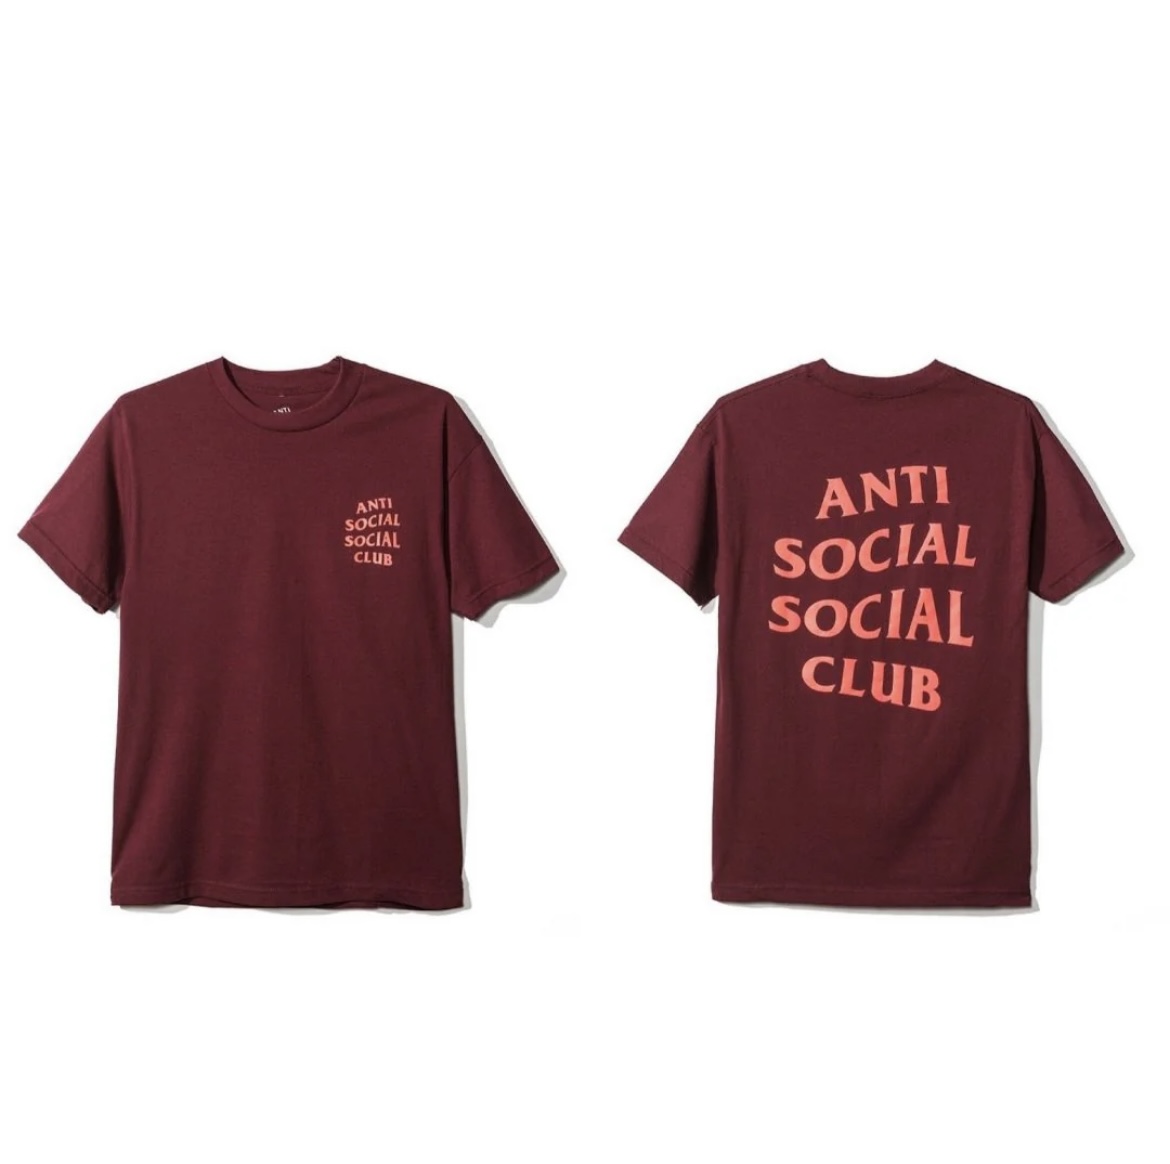 ASSC Anti Social Social Club Tee 2 Maroon Size M